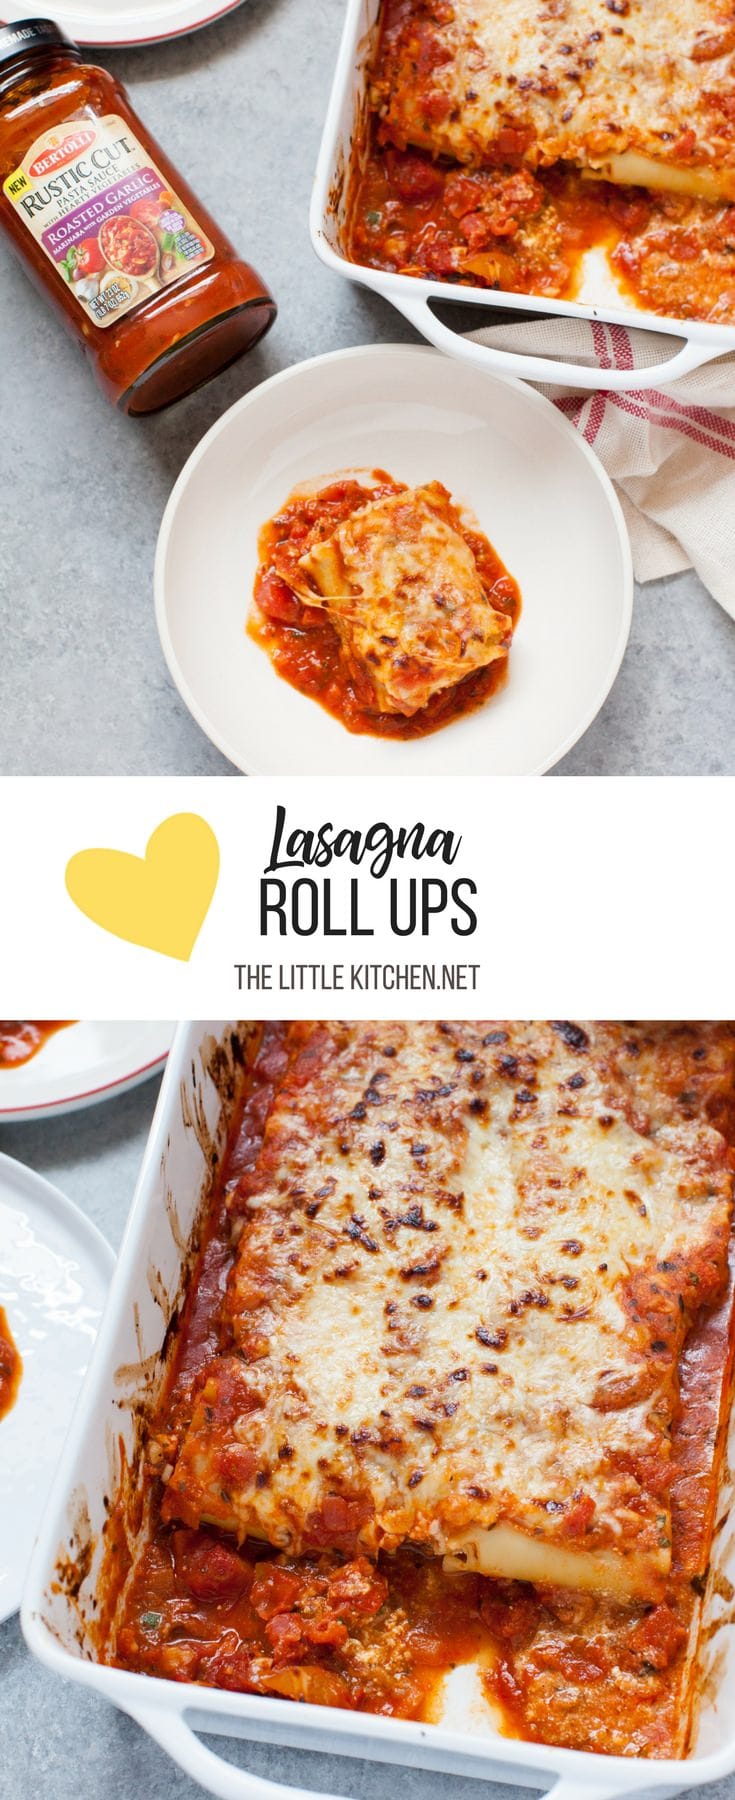 Lasagna Roll Ups from thelittlekitchen.net